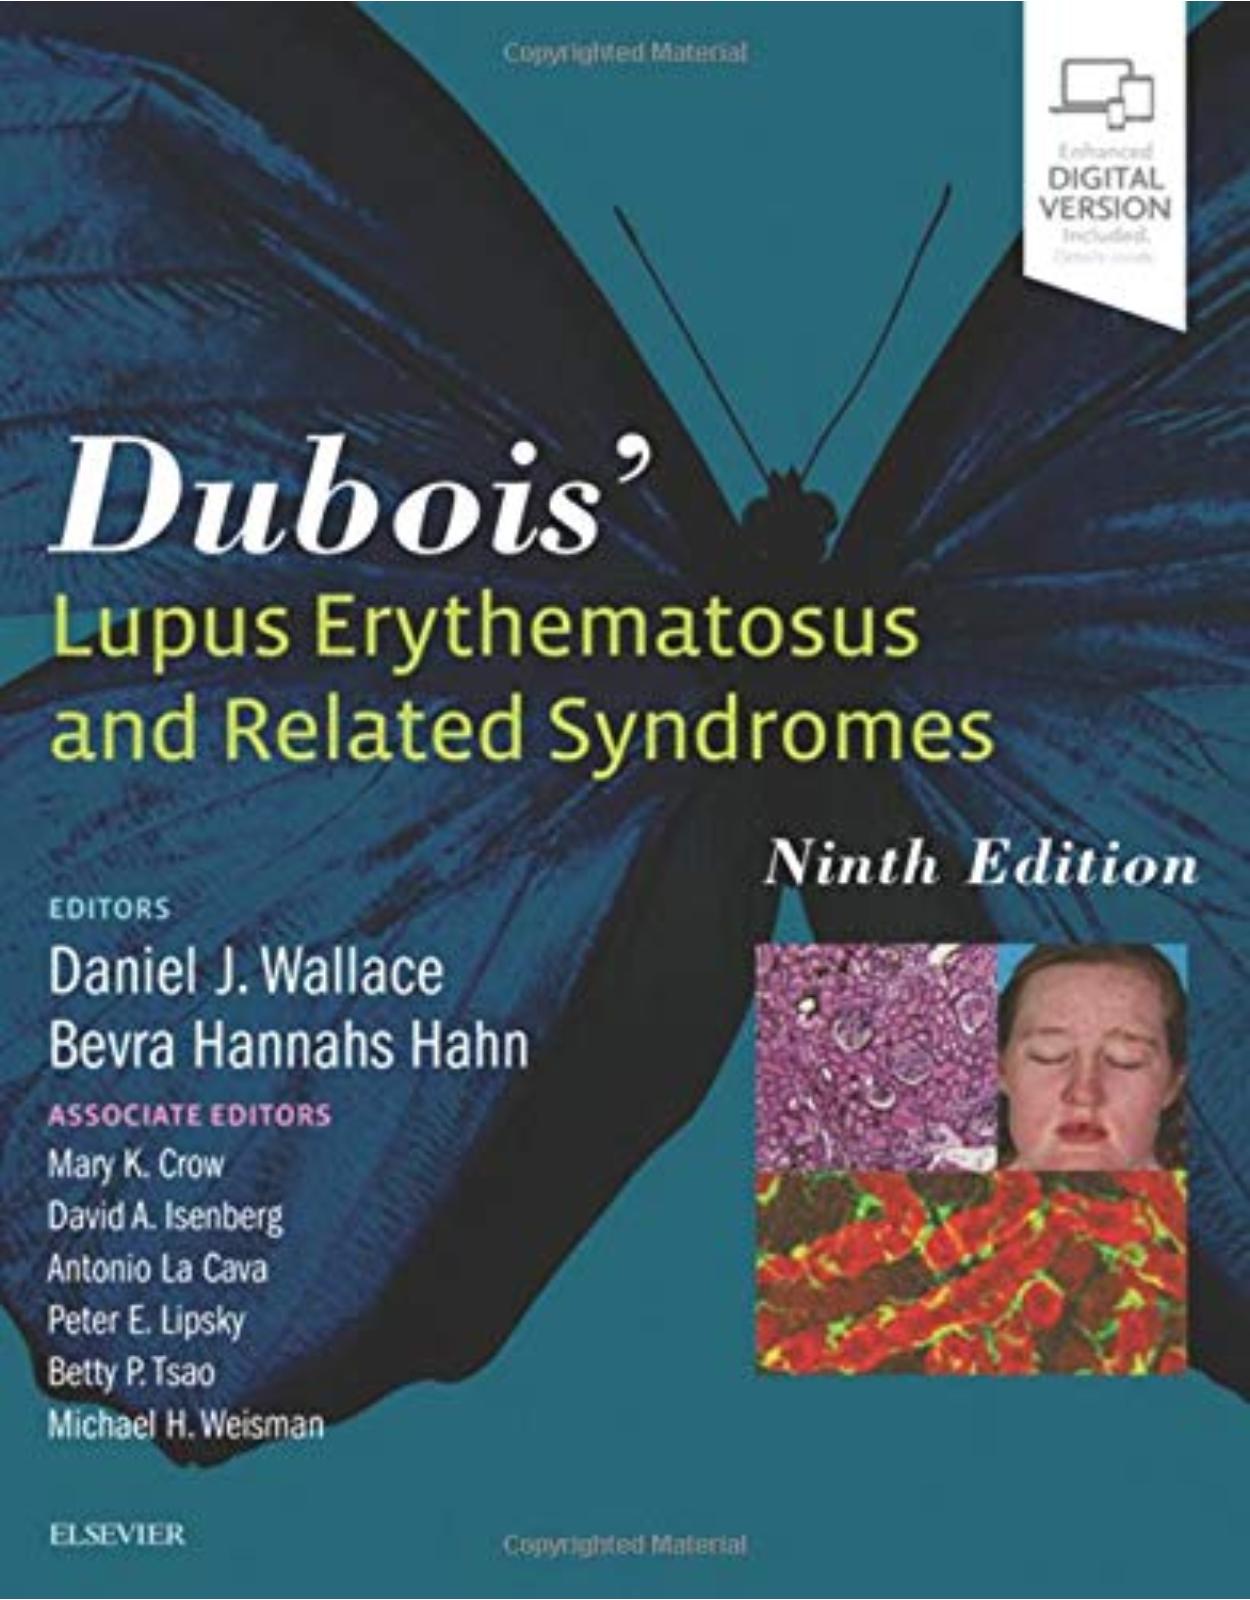 Dubois Lupus Erythematosus and Related Syndromes, 9e